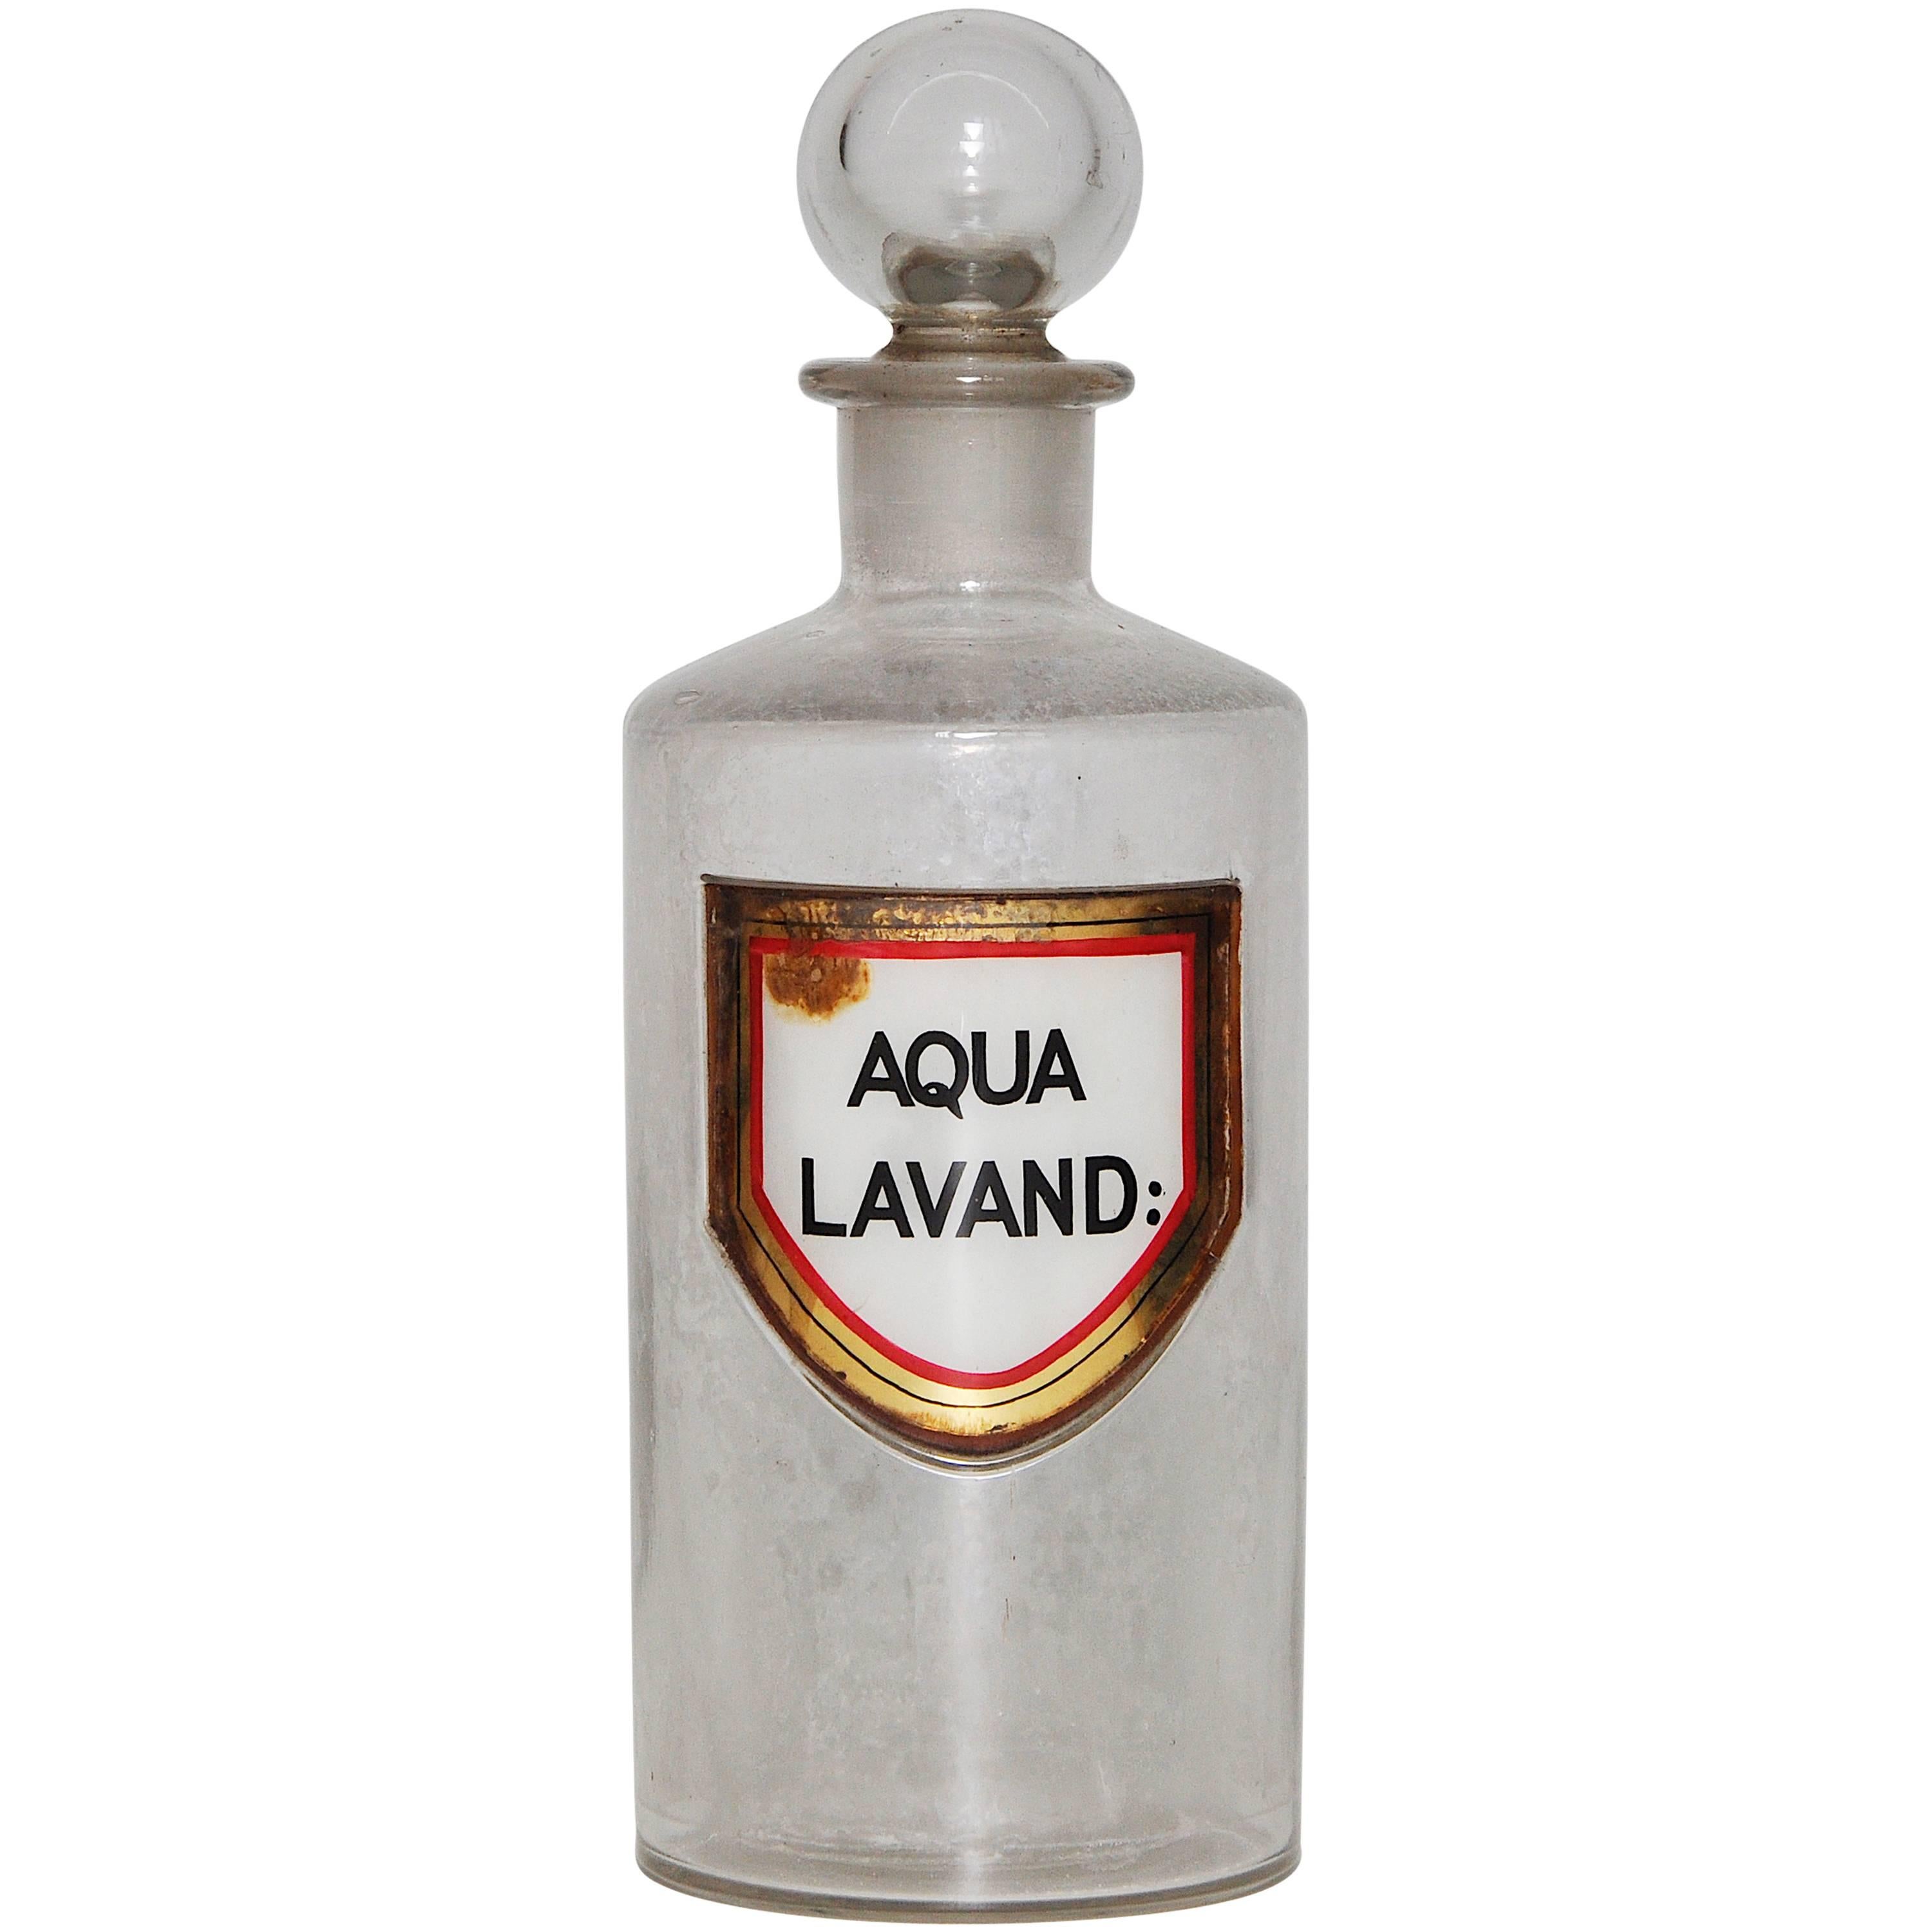 Rare Antique Perfume Bottle, ‘Aqua Lavand:’ Apothecary Glass Gold Leaf For Sale